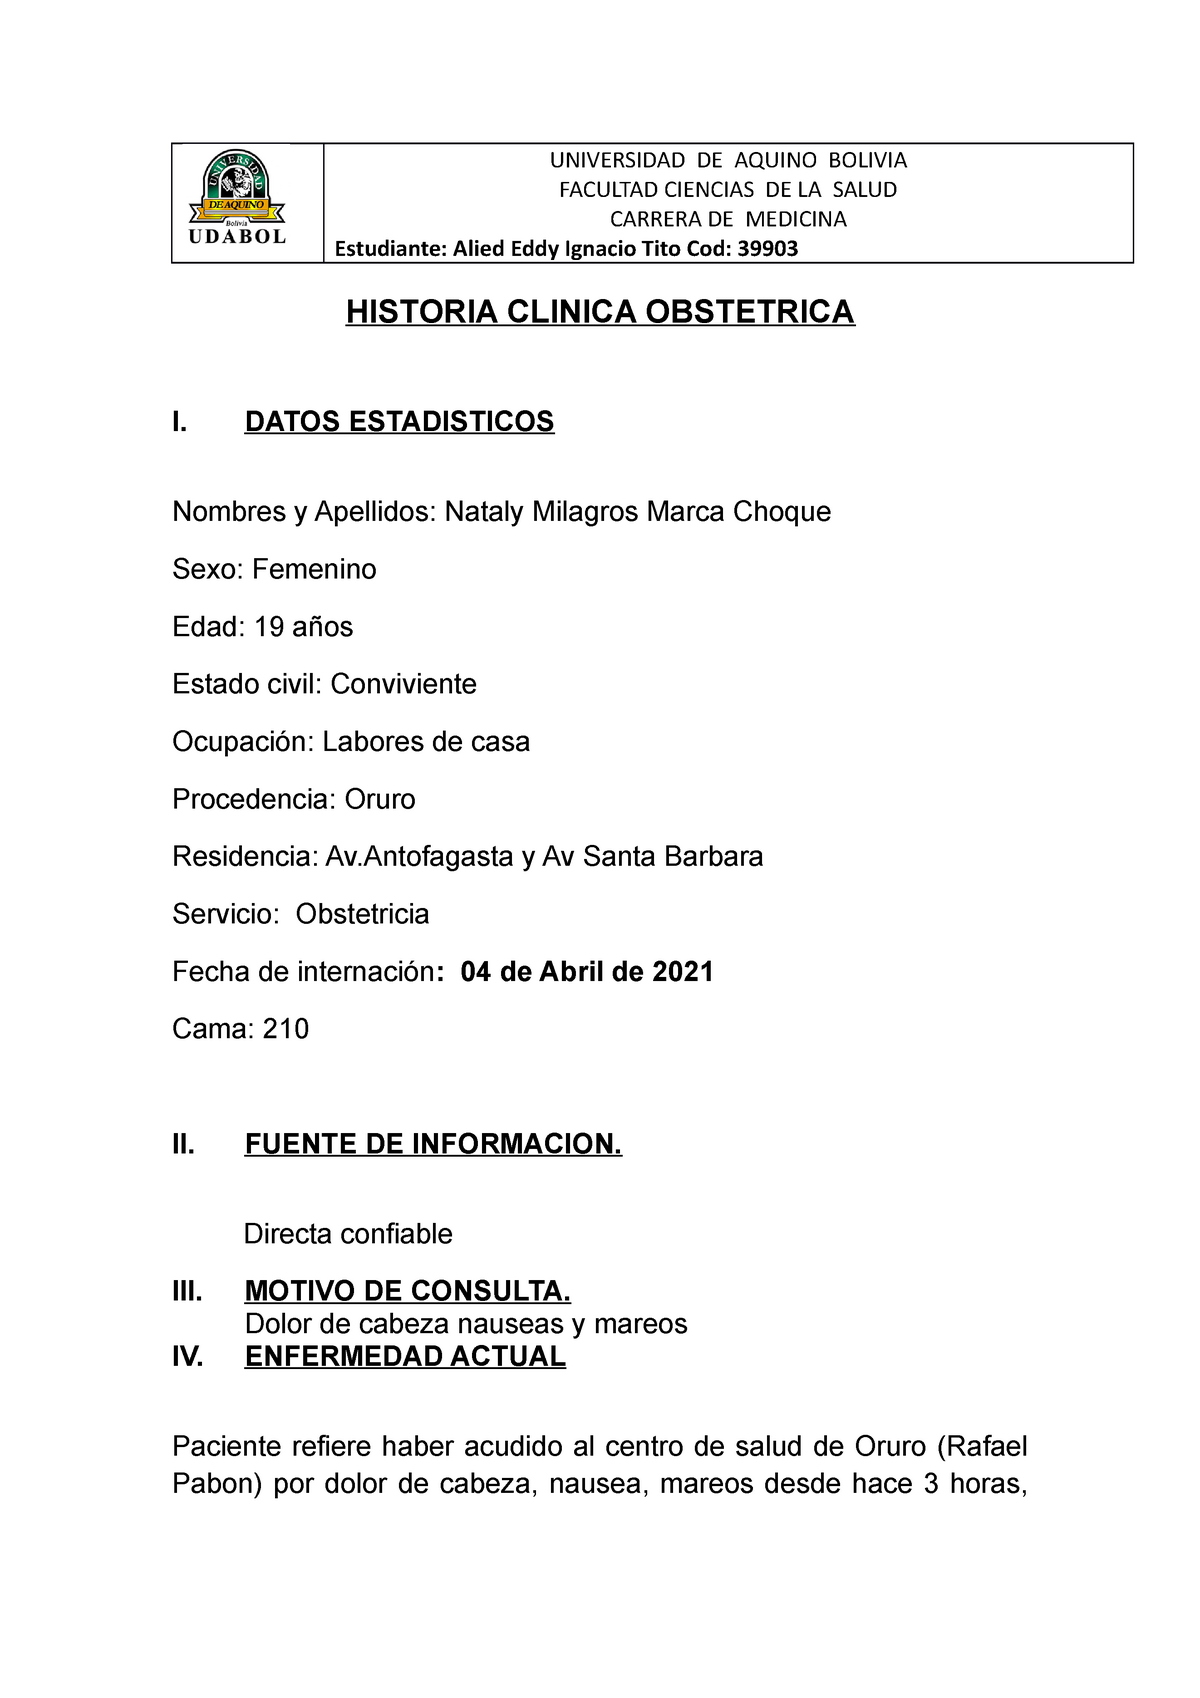 Historia Clinica Obstetrica - UNIVERSIDAD DE AQUINO BOLIVIA FACULTAD  CIENCIAS DE LA SALUDCARRERA DE - Studocu